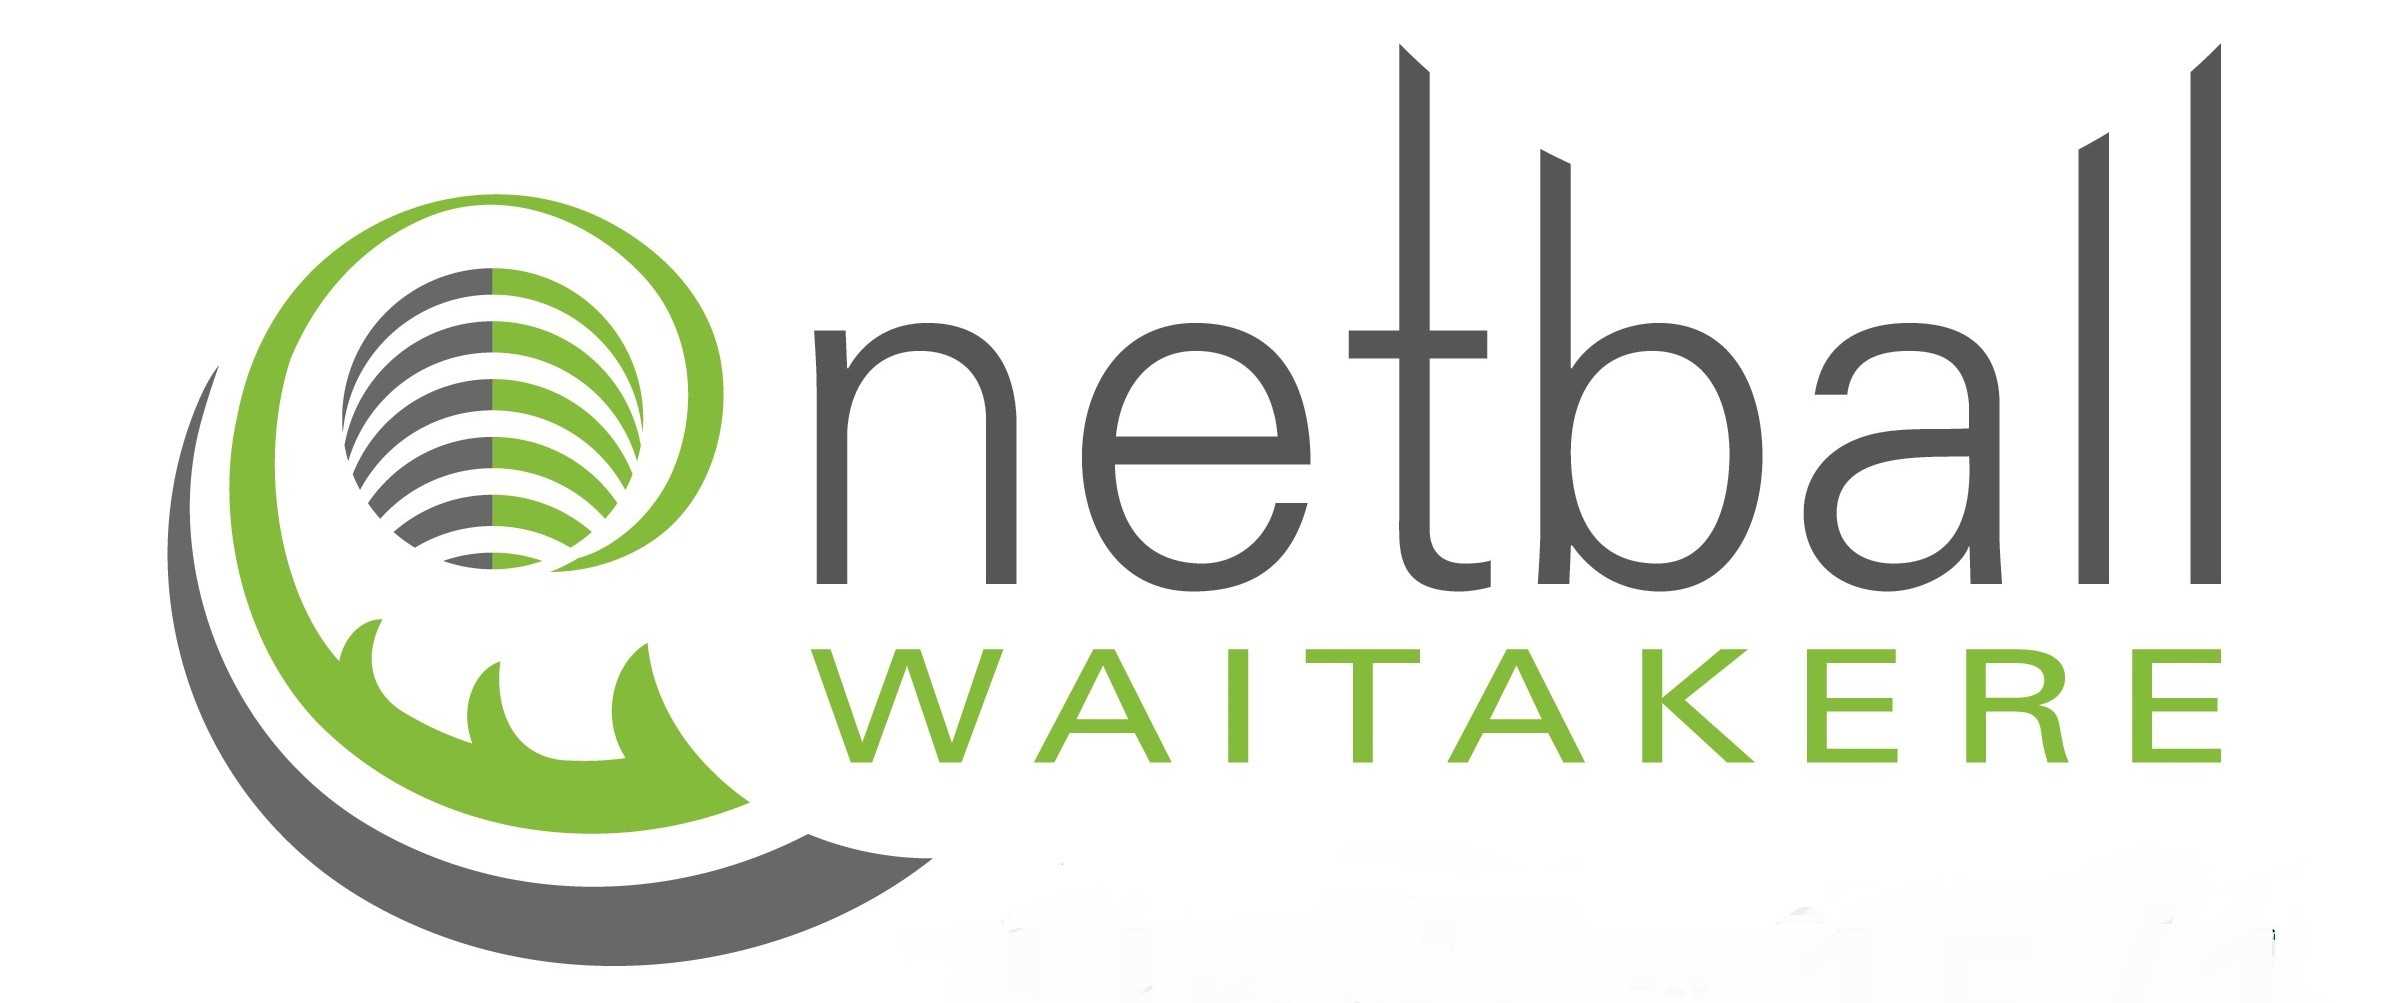 Netball Waitakere logo AW